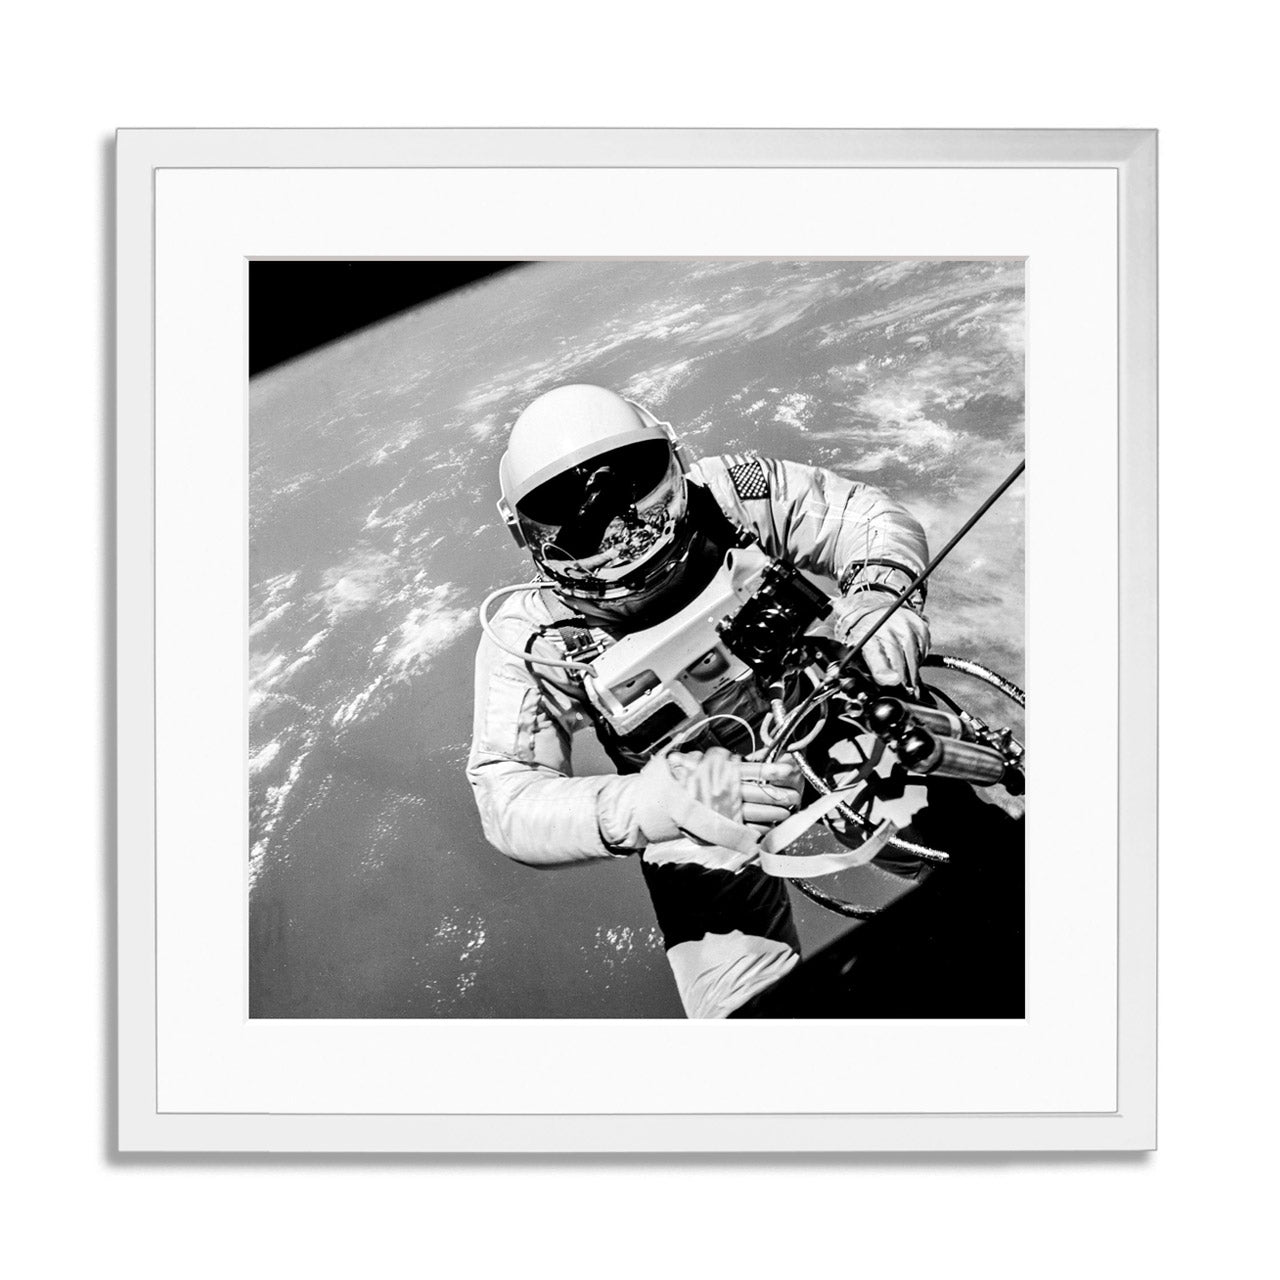 Gemini IV Spacewalk Frame Print